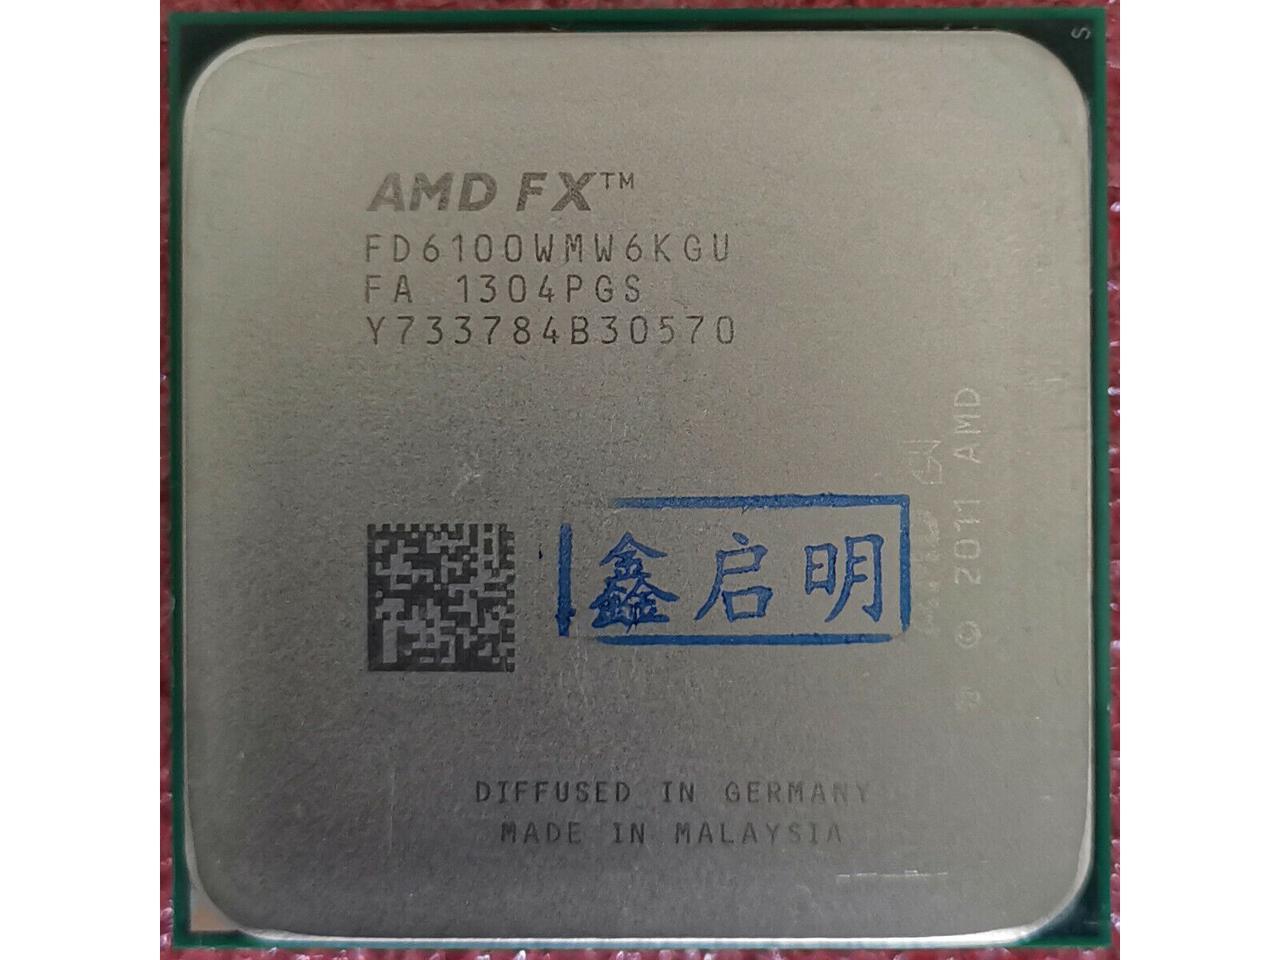 AMD FX-6100 3.3GHz Six Core (FD6100WMW6KGU) Desktop PC CPU Processor Socket AM3+ 938-pin